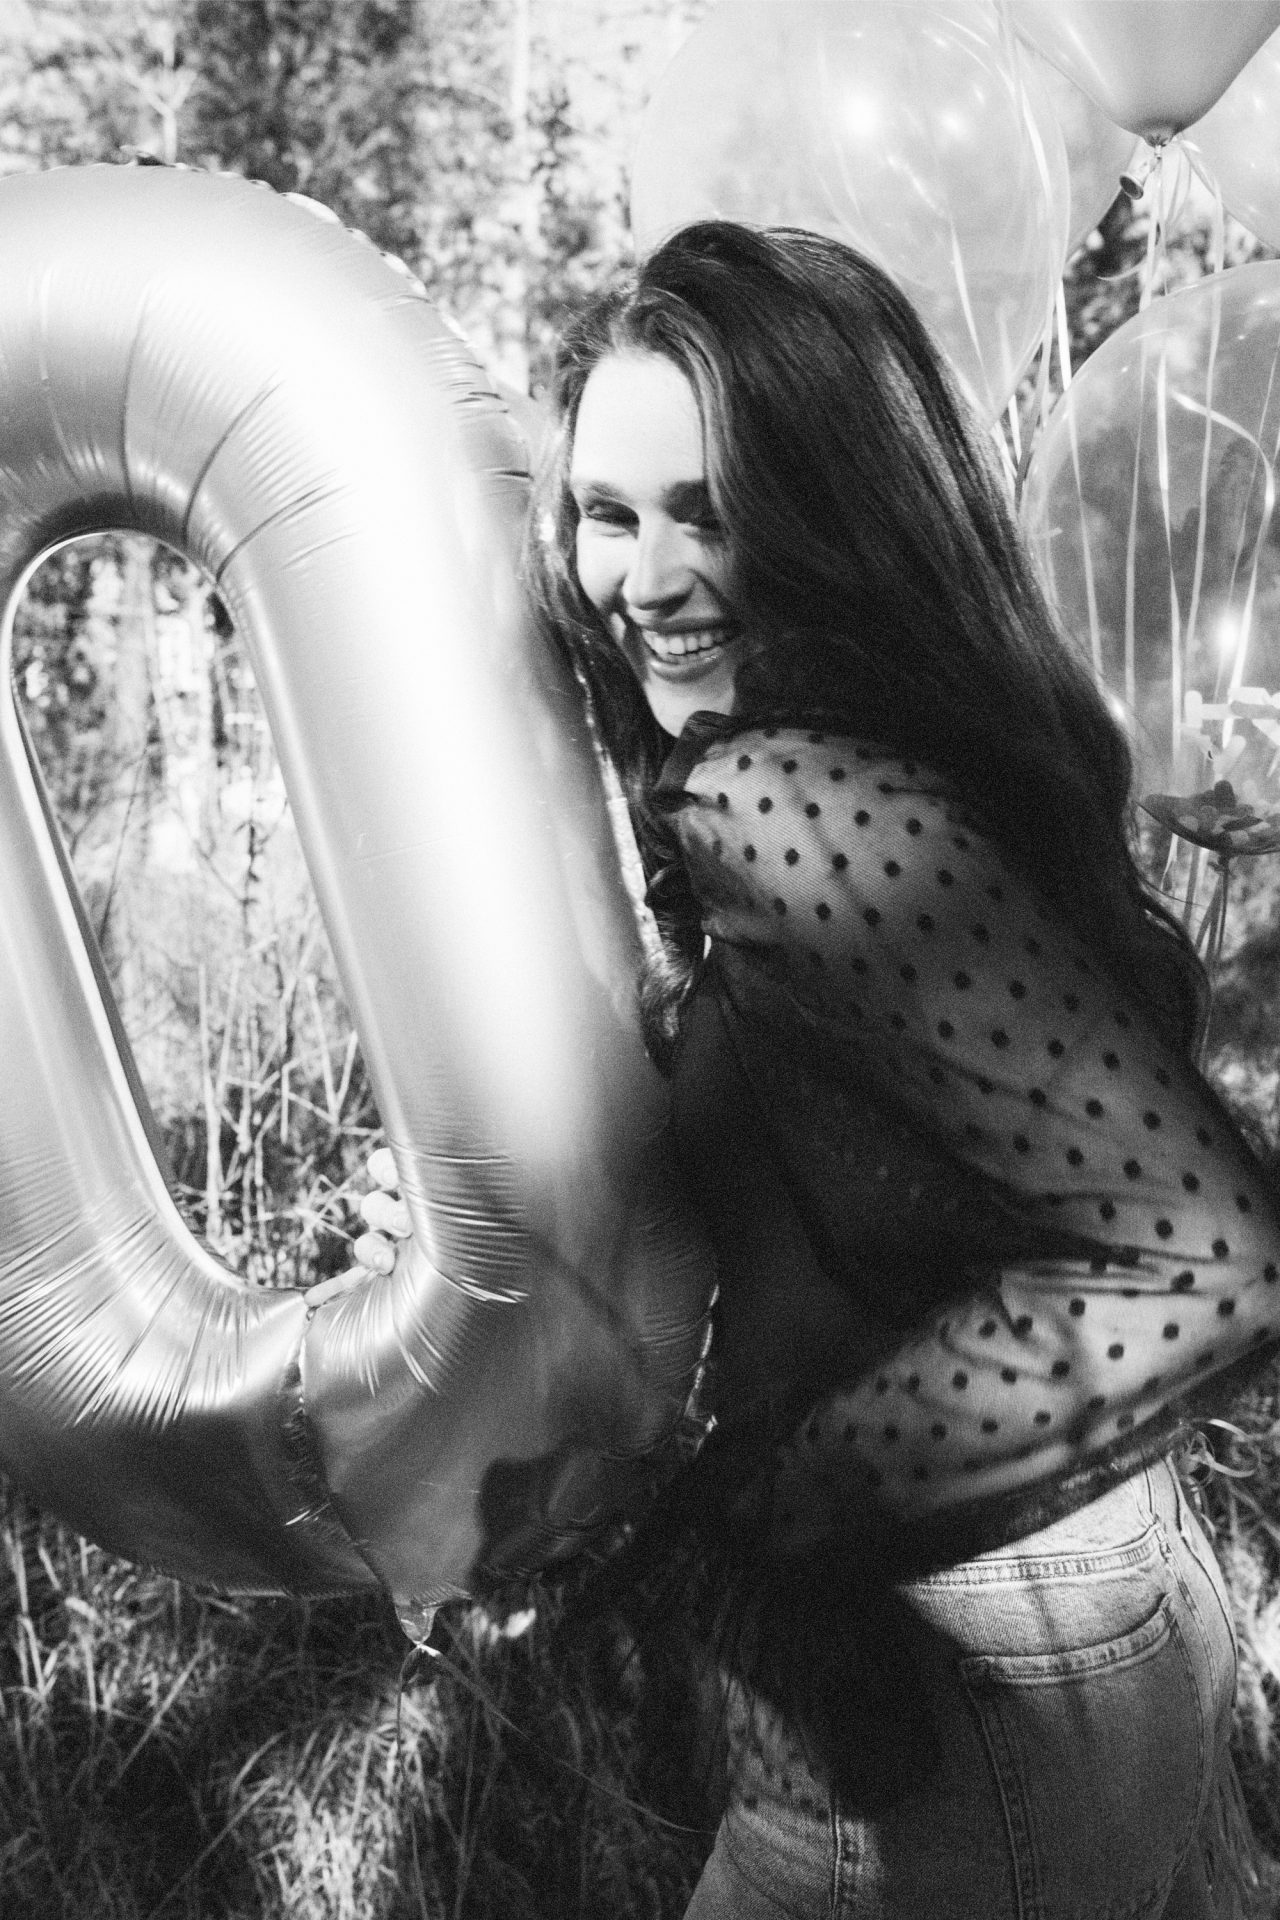 30th birthday, turning 30, thirty photoshoot, balloon birthday shoot, balloons, photos, birthday, turning thirty